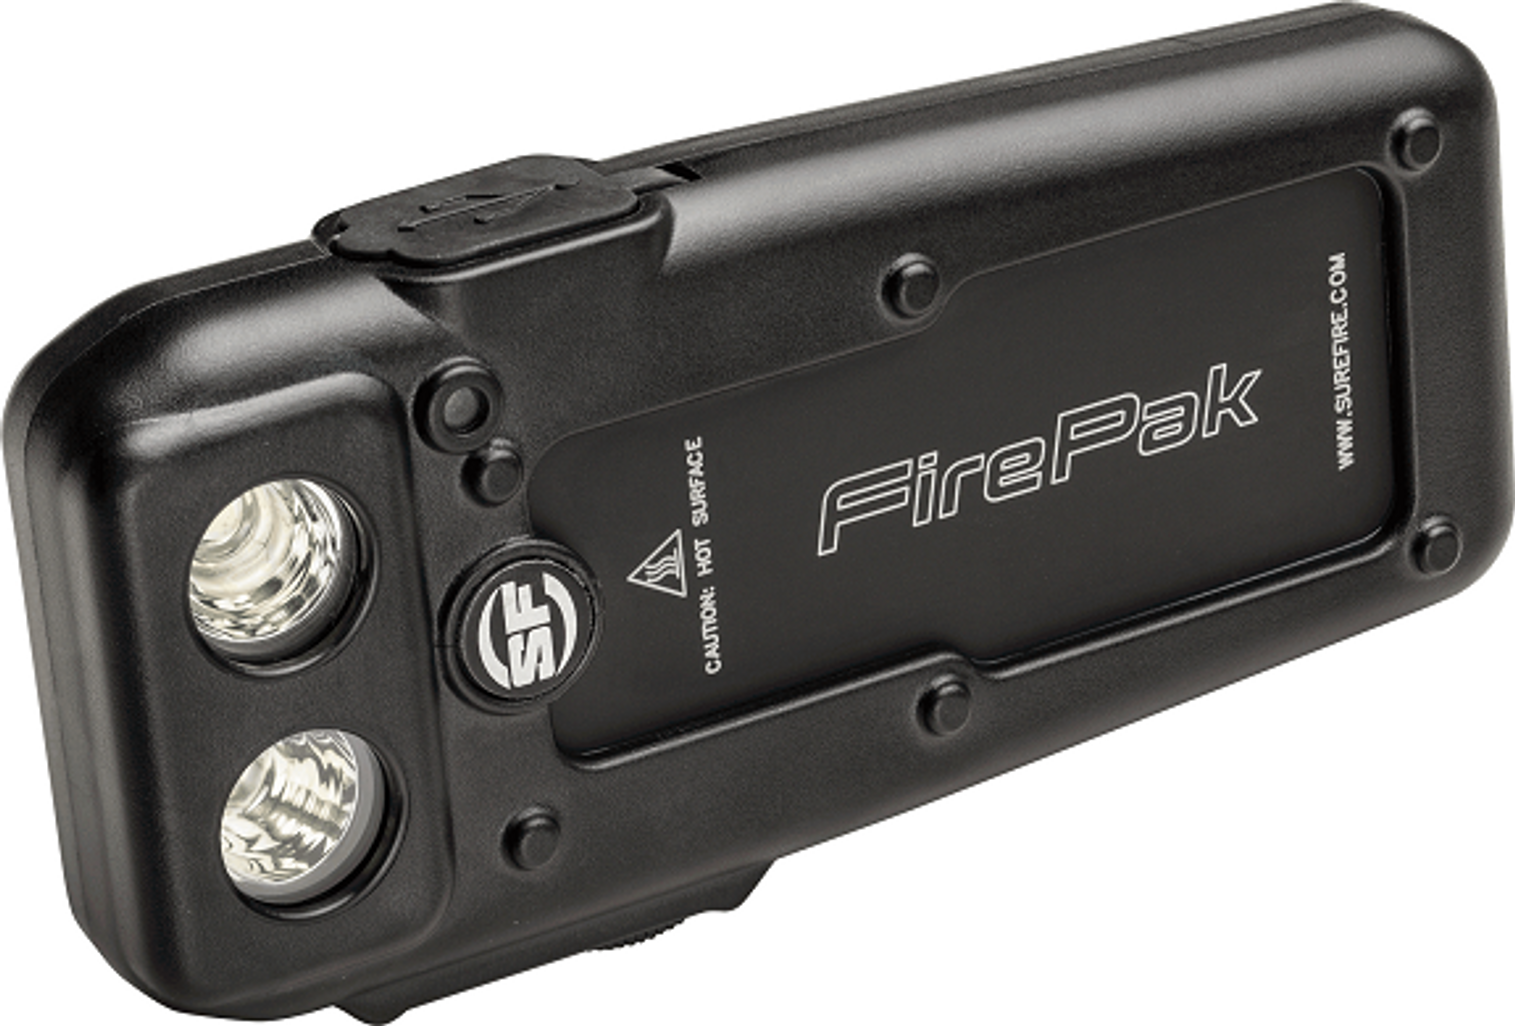 Surefire FirePak Smartphone Iluminator - 1500 Lumens